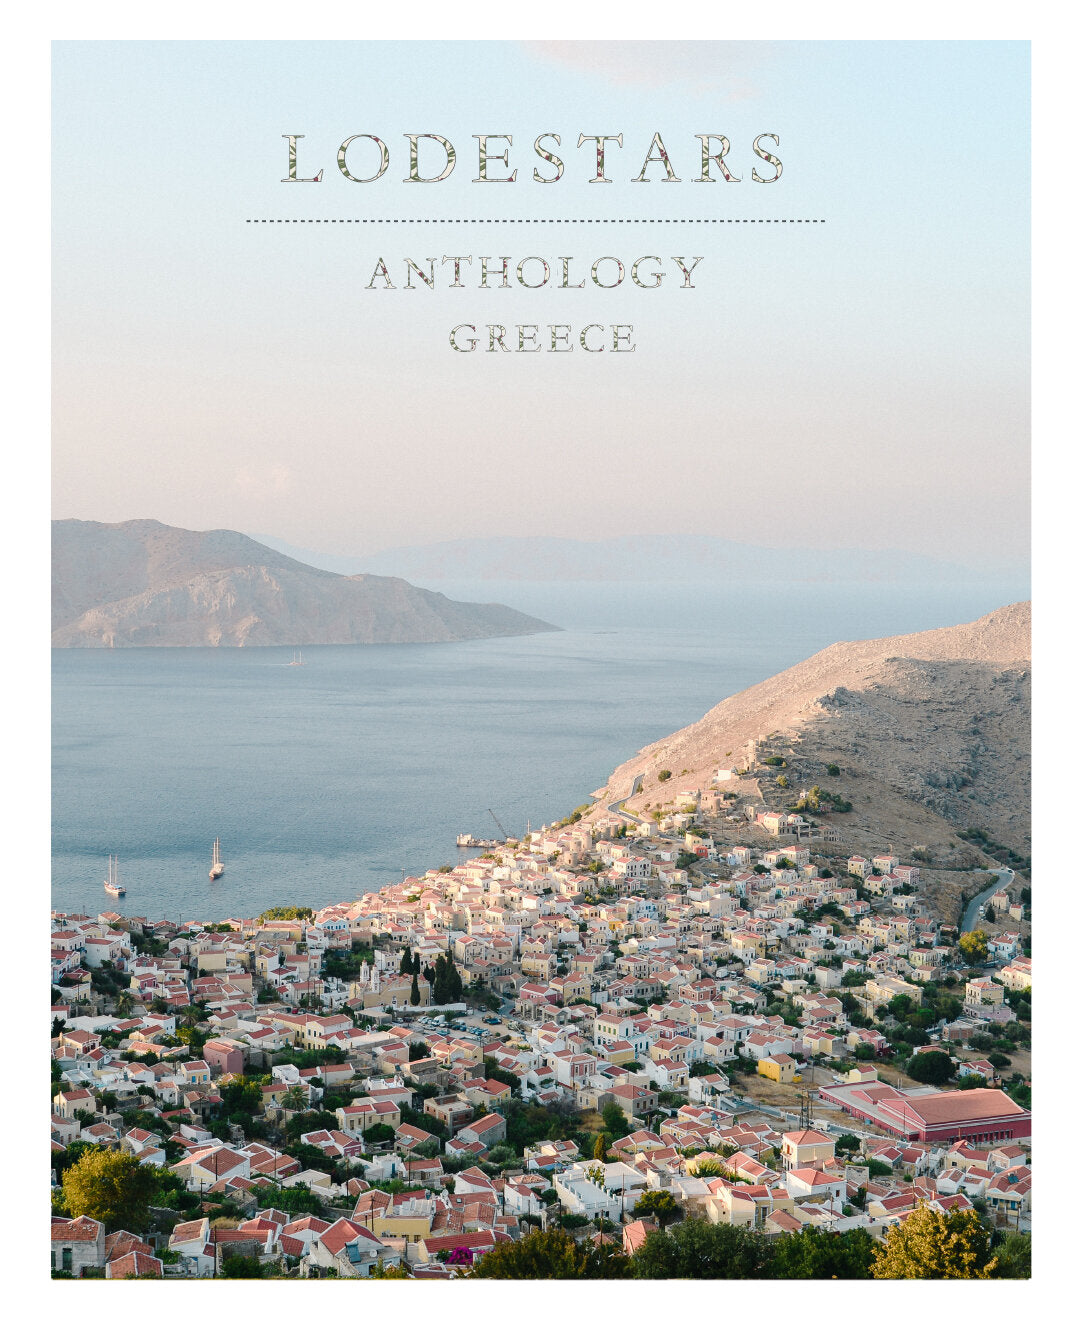 LODESTARS ANTHOLOGY - GREECE